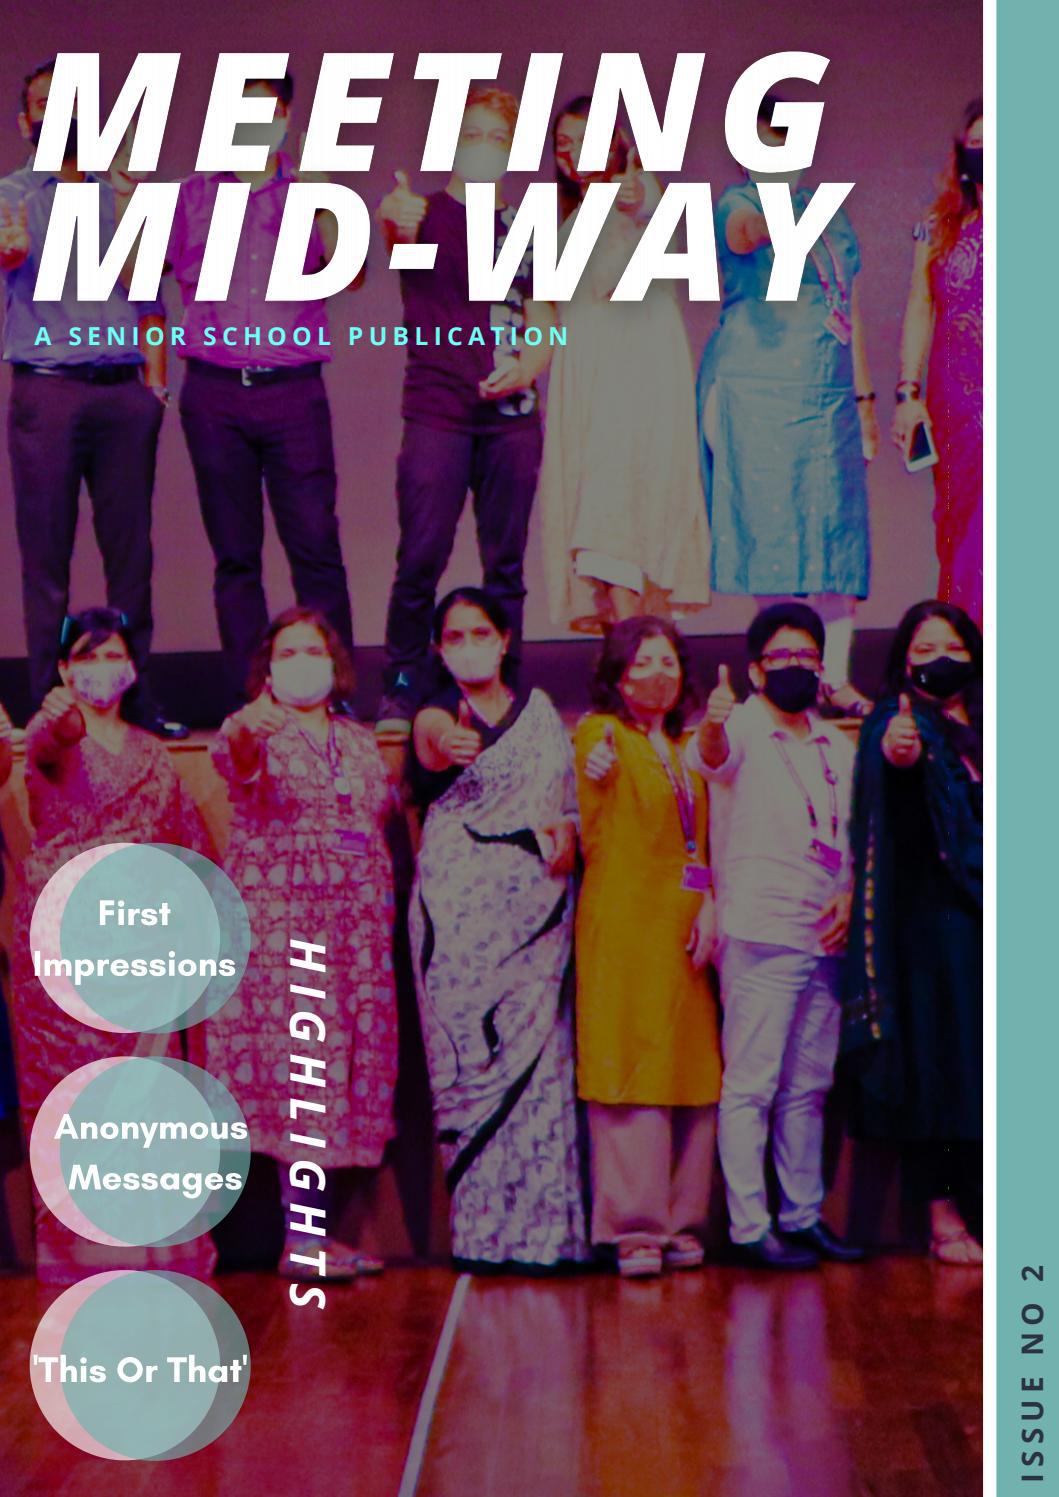 Senior School Presents - Meeting Mid-Way Magazine 2.0